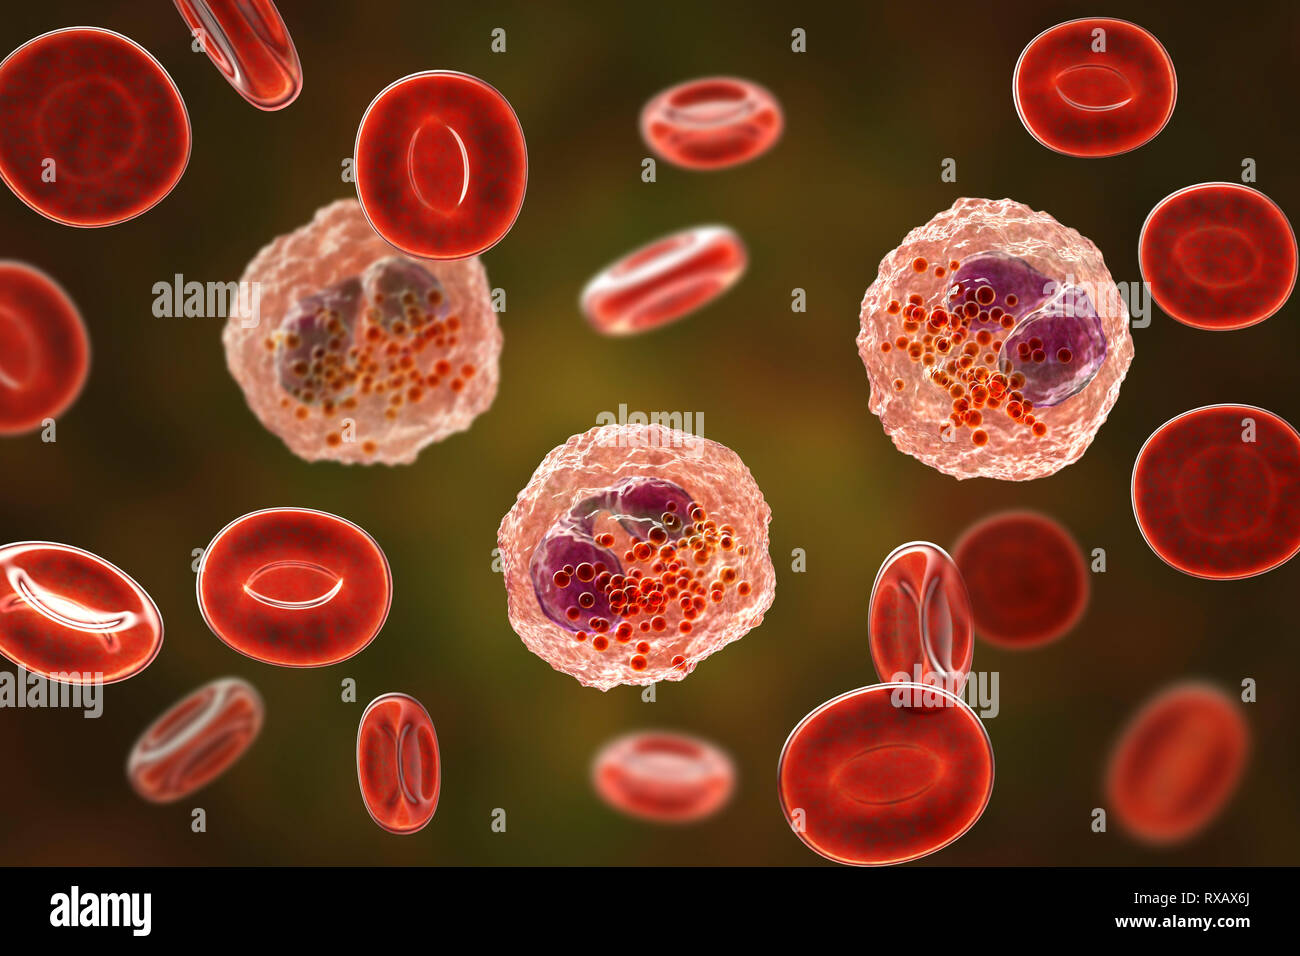 Blood smear with numerous eosinophils, illustration Stock Photo